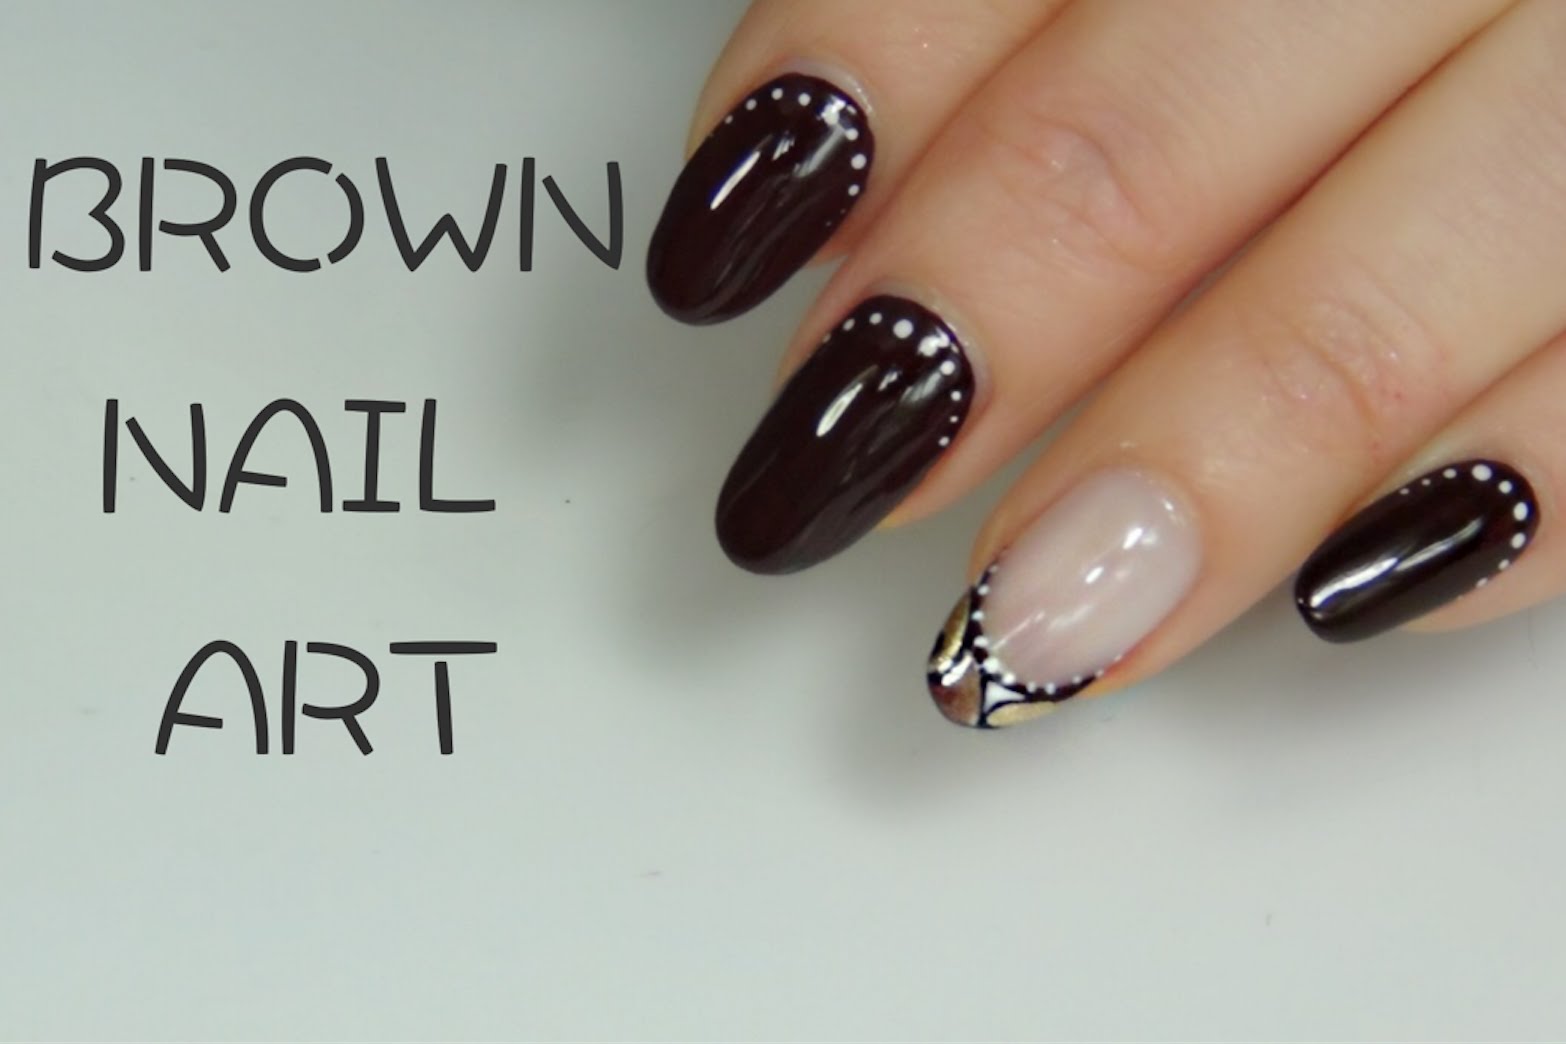 Brown Nail Art Tutorial Video